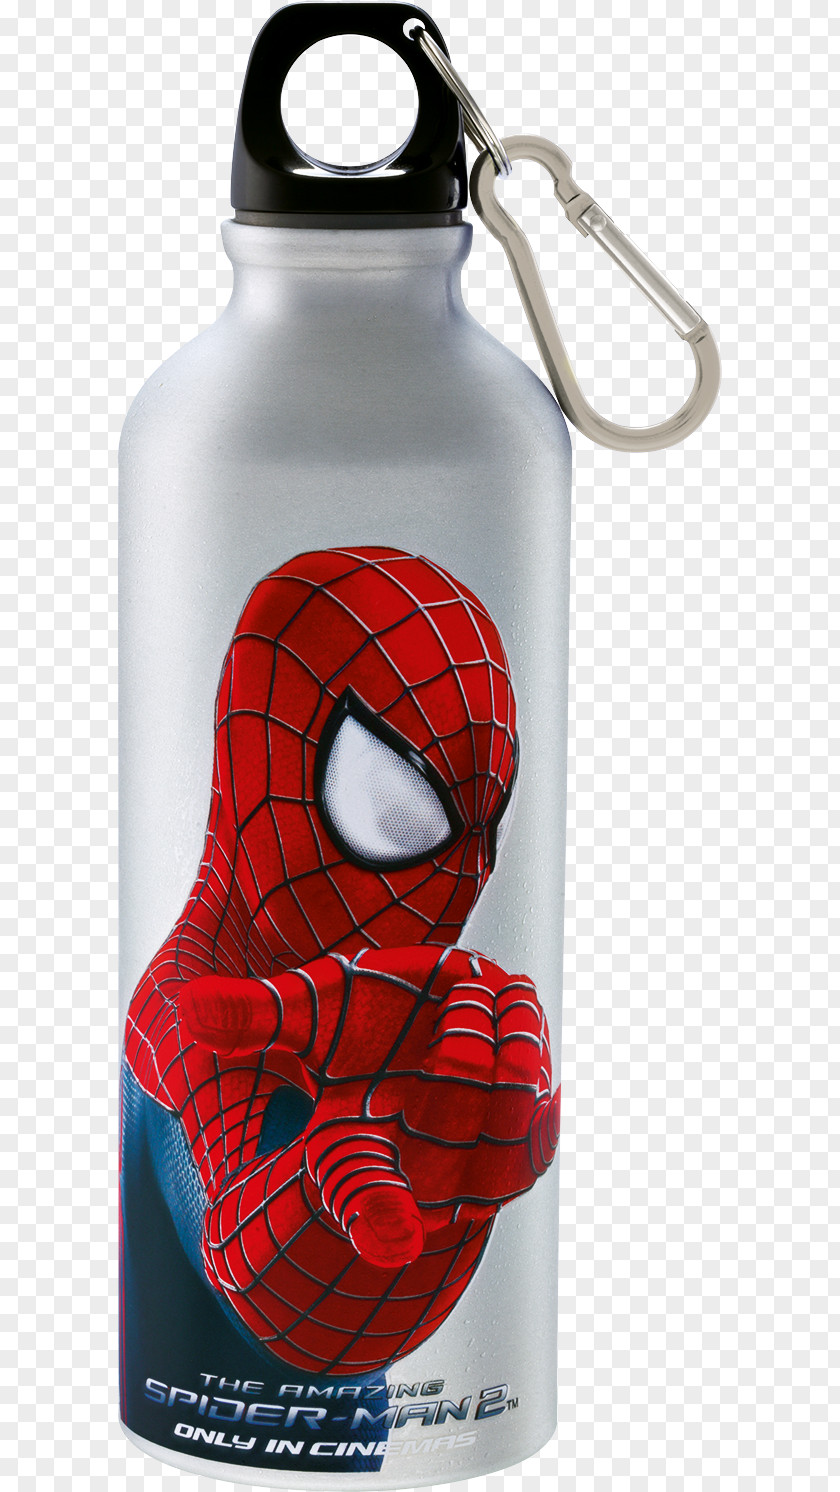 Spider-man Spider-Man Marvel Comics Superhero Movie Water Bottles PNG